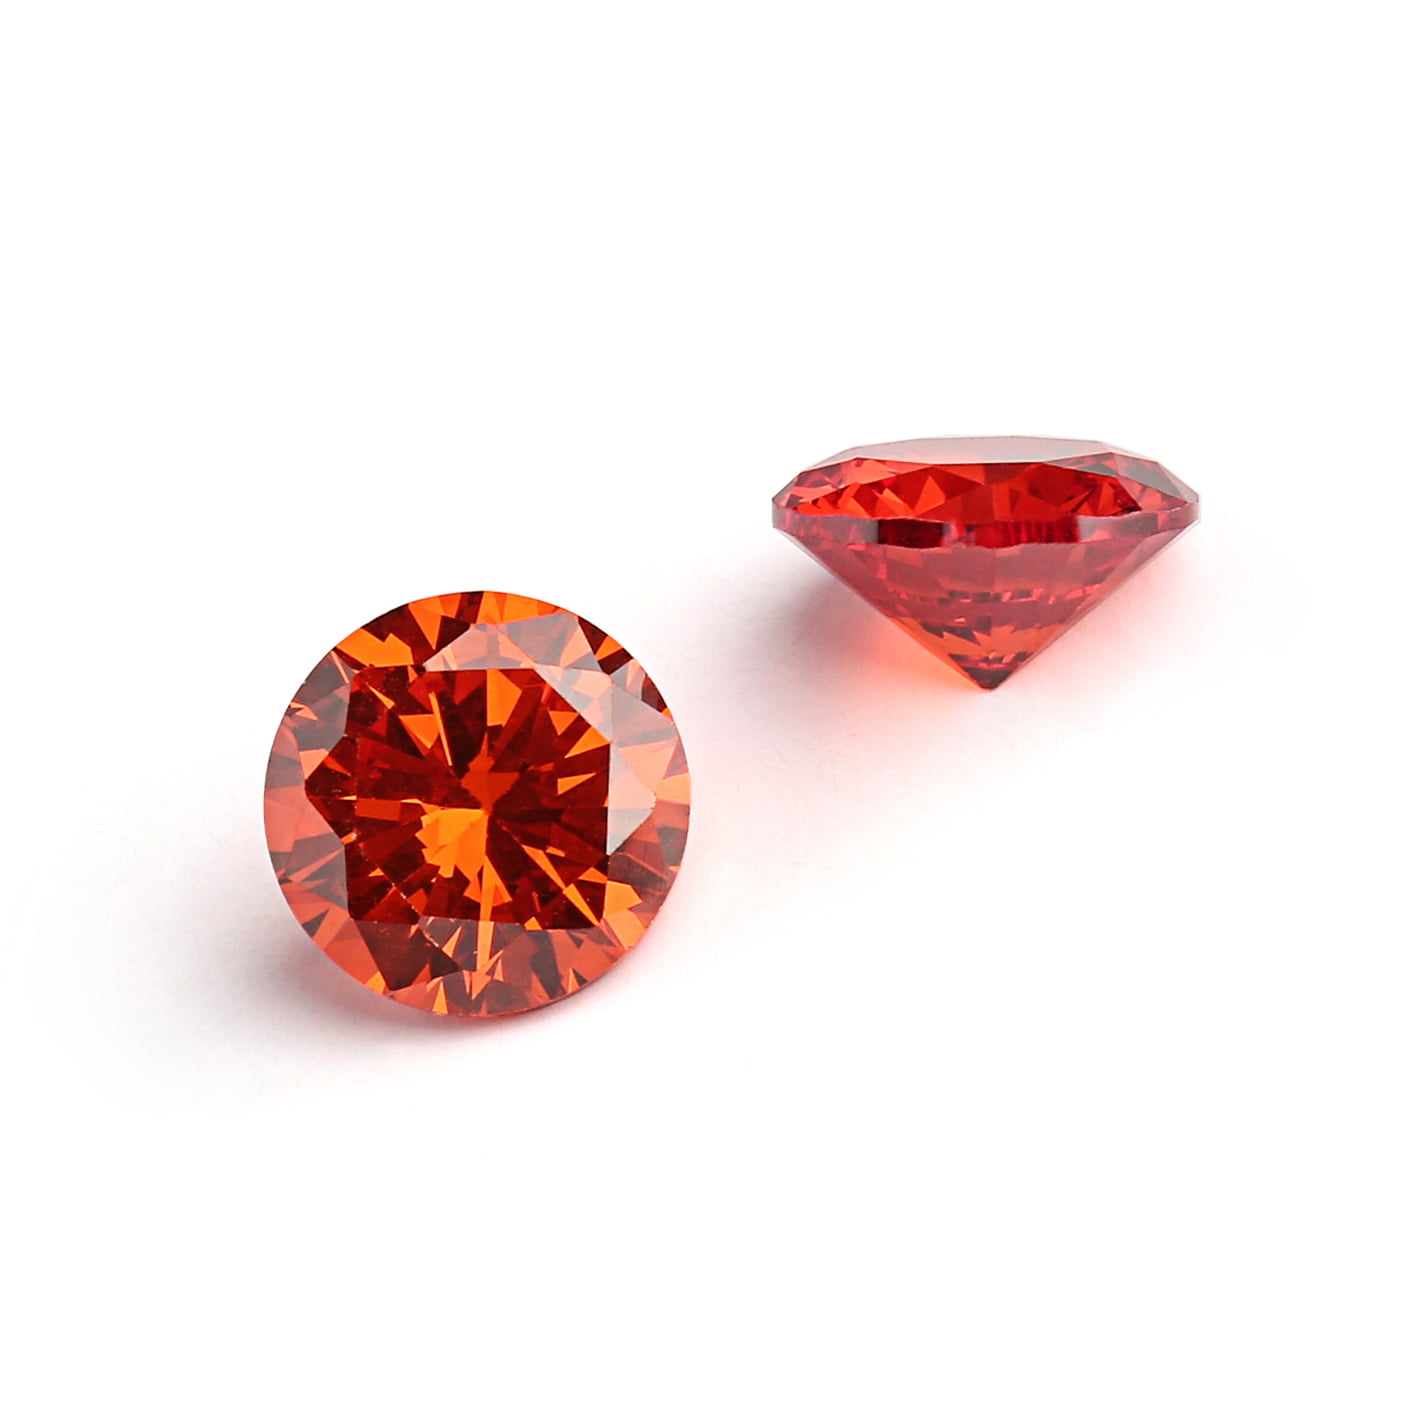 10 Cubic Zirconia Flat Pear Briolettes Beads 6x6mm Orangey Red #64124 